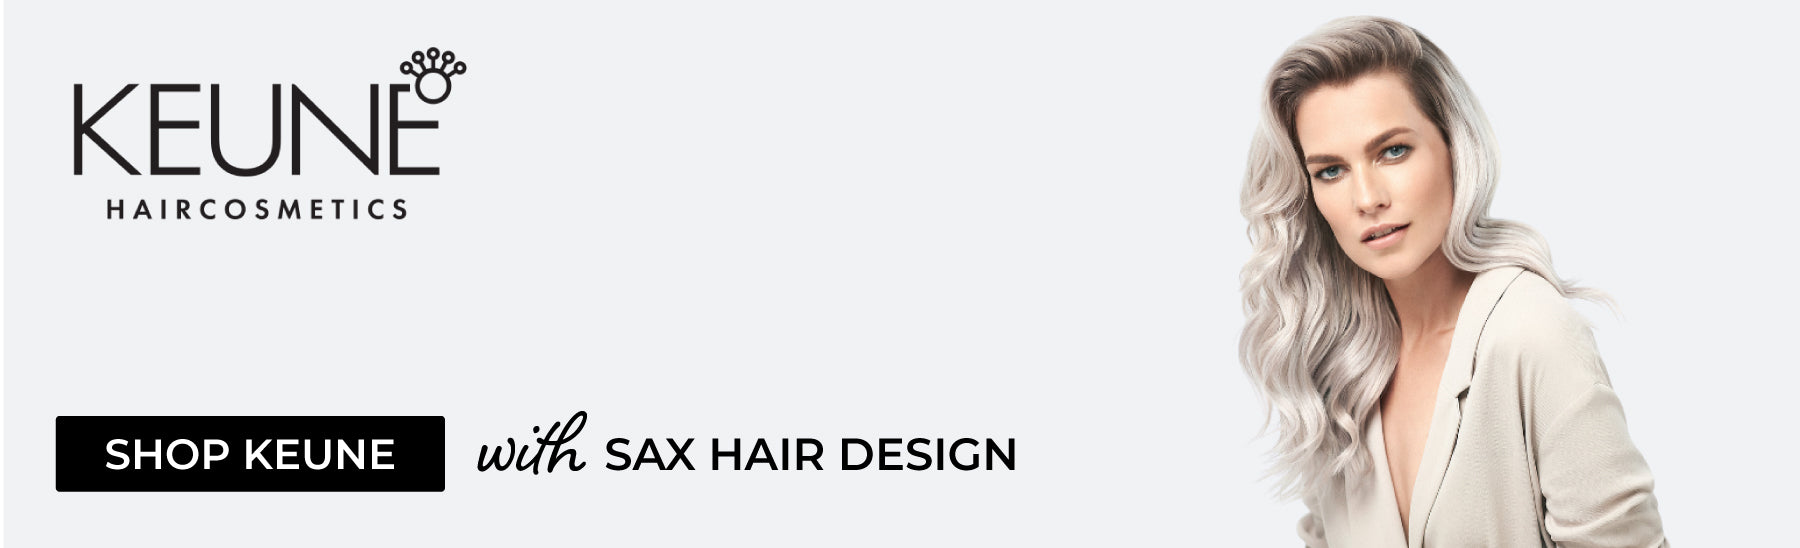 Shop Keune Hair Cosmetics with Sax Hair Design.